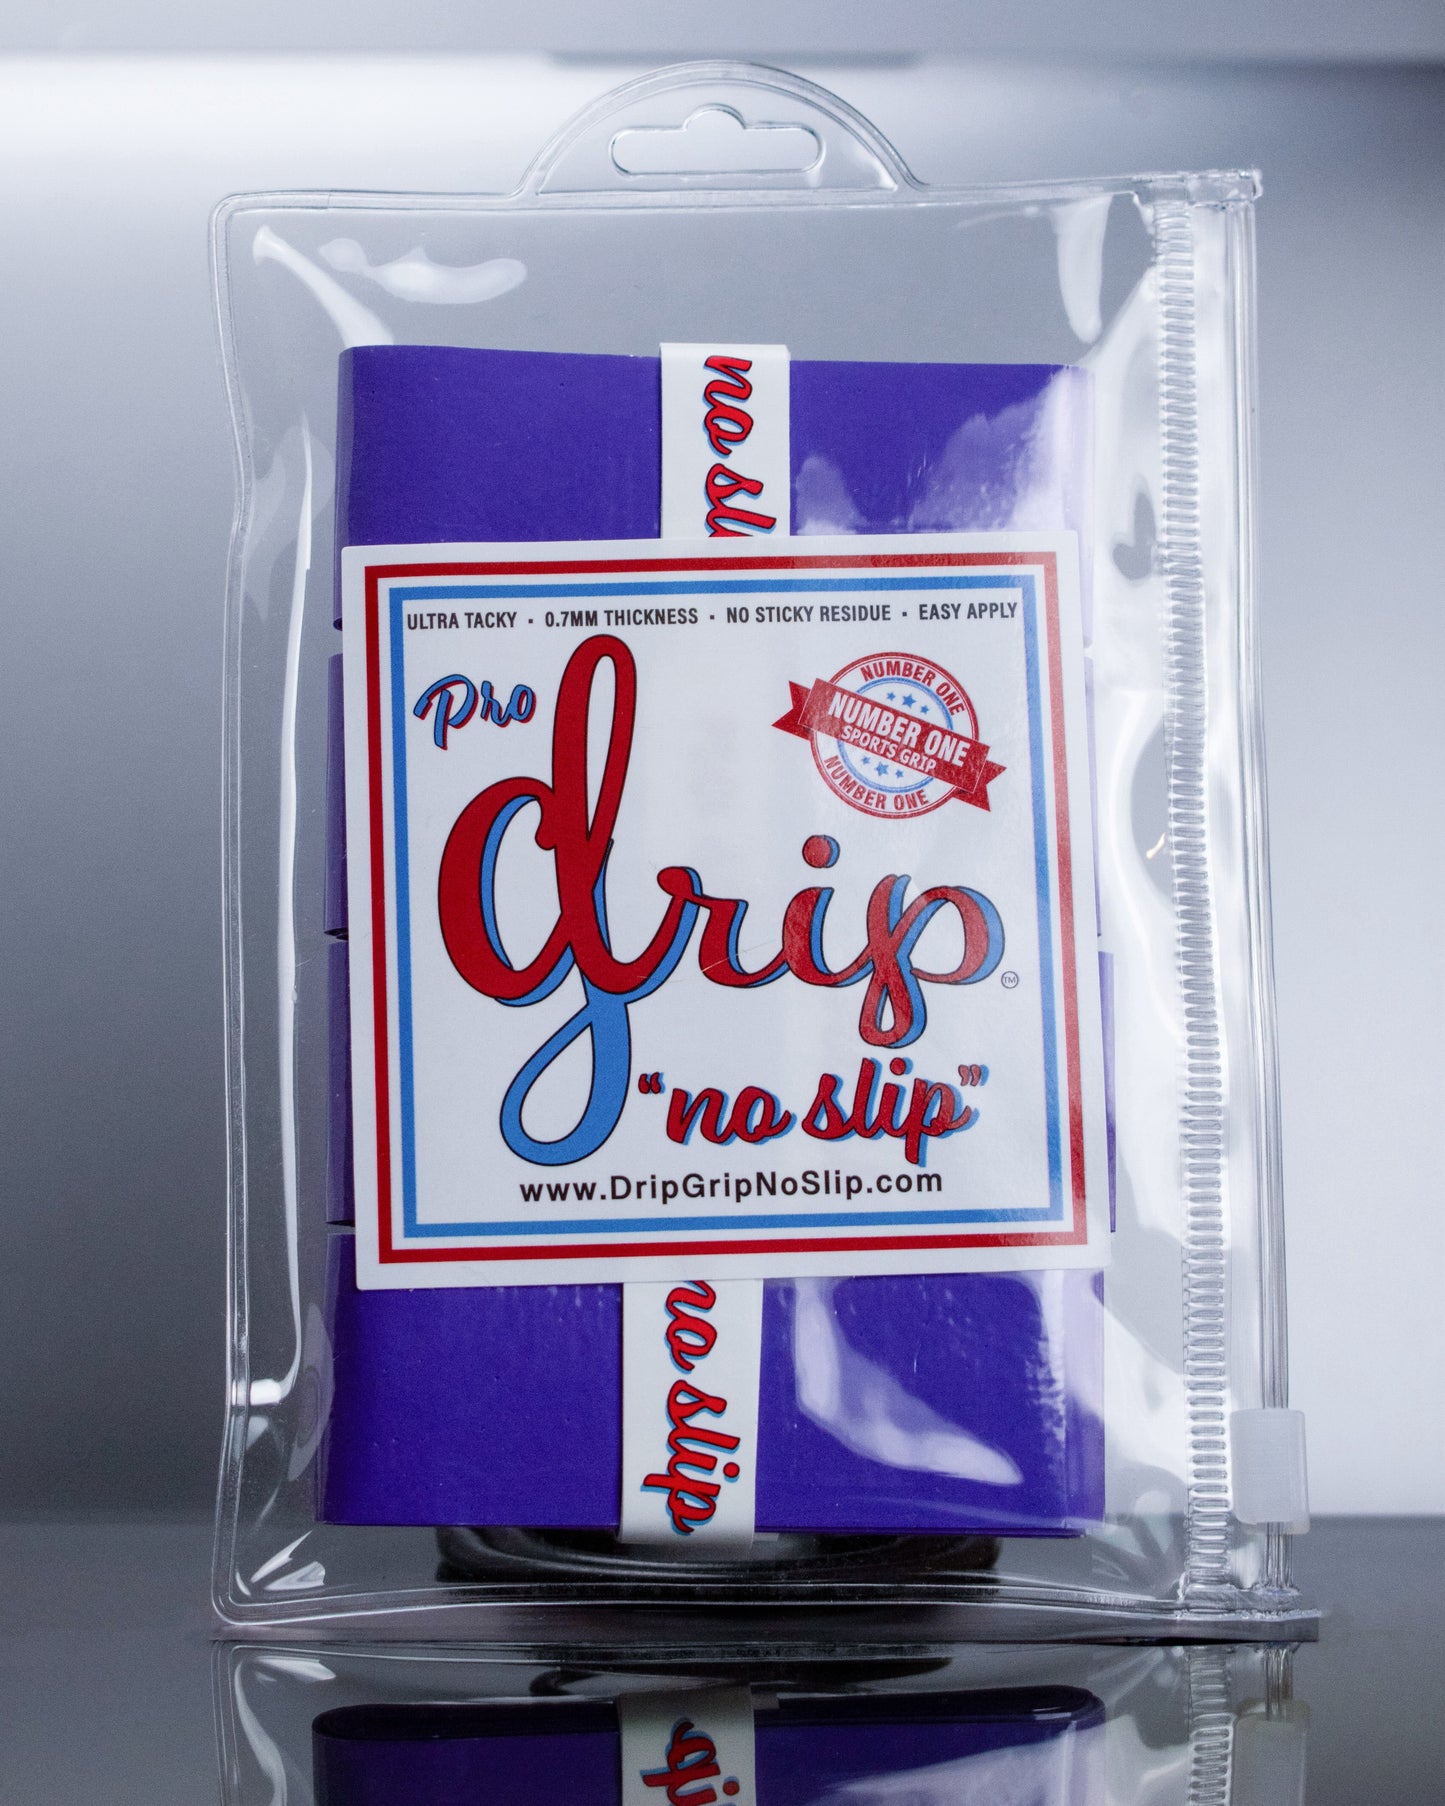 Drip Grip Pro • 0.7mm • 4 Packs • 10 Colors